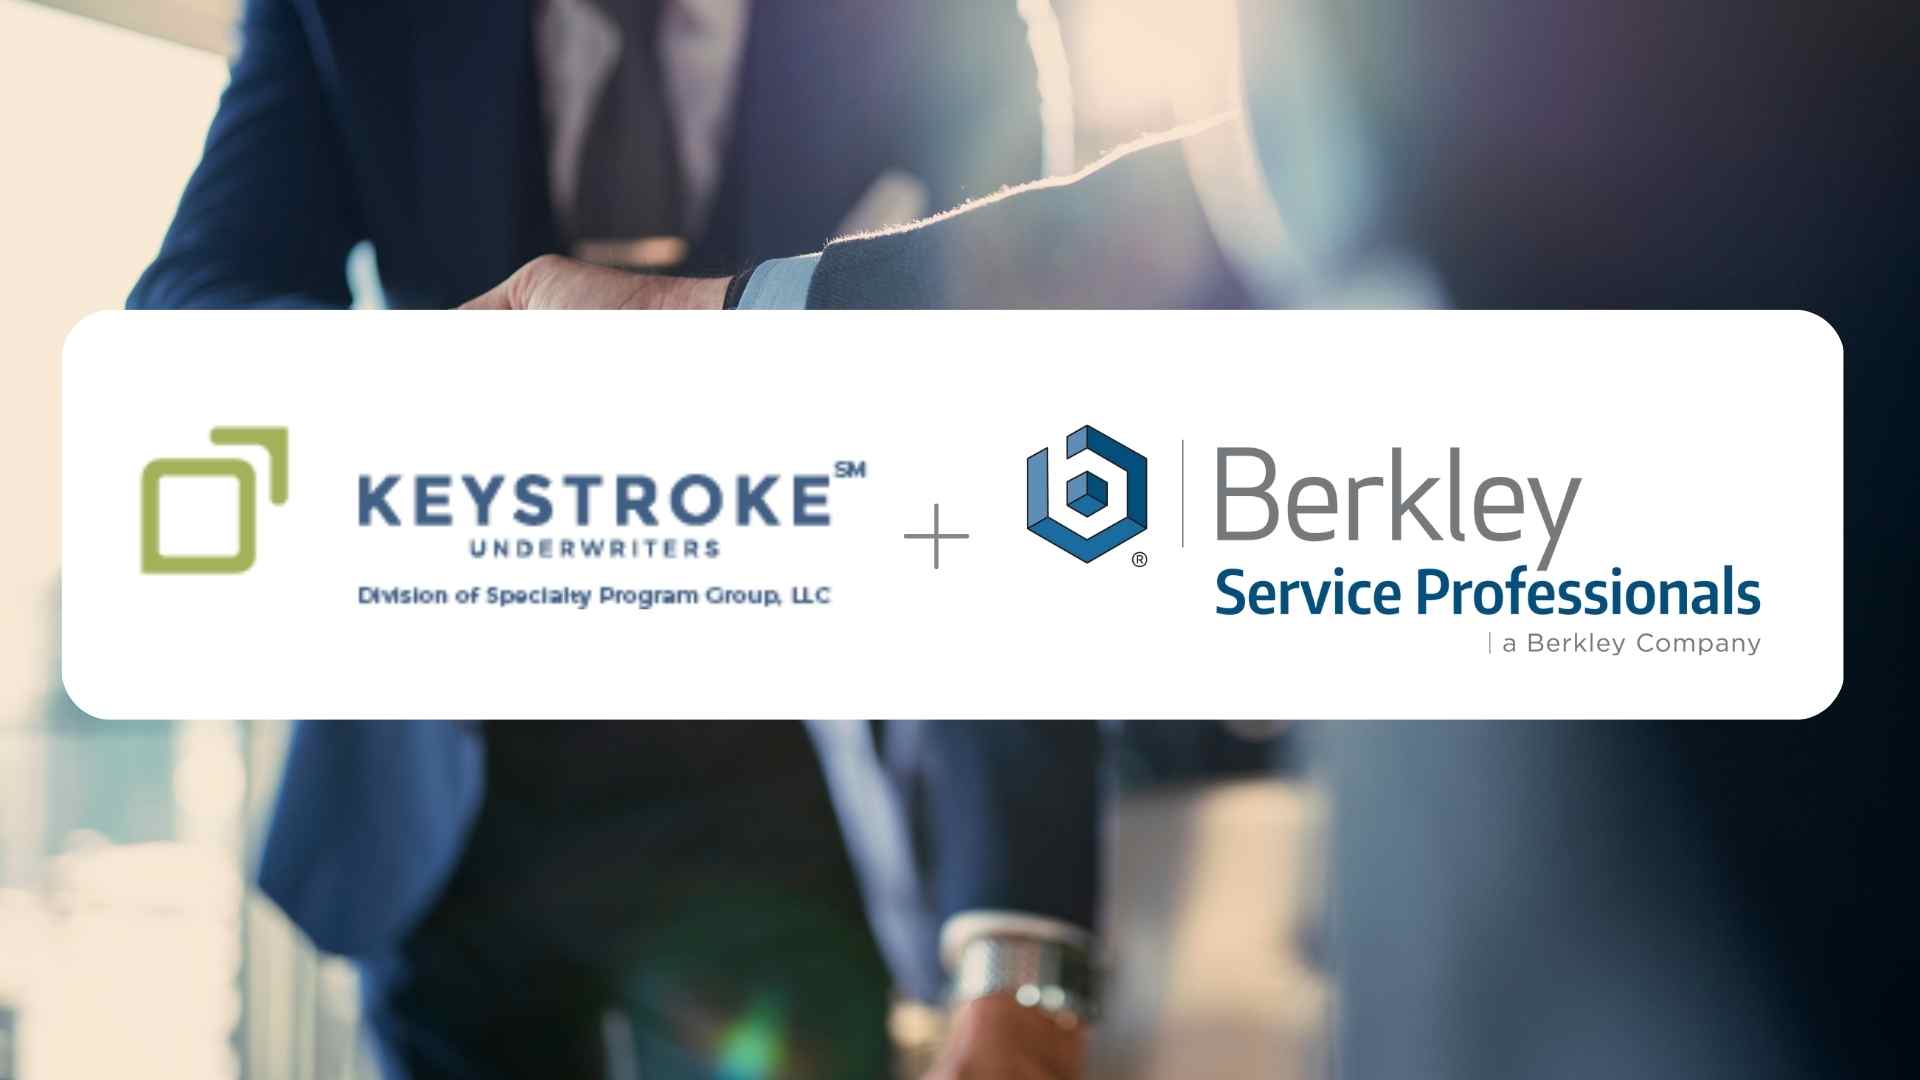 Keystroke Underwriters Berkley Service Professionals Partnership 2 1